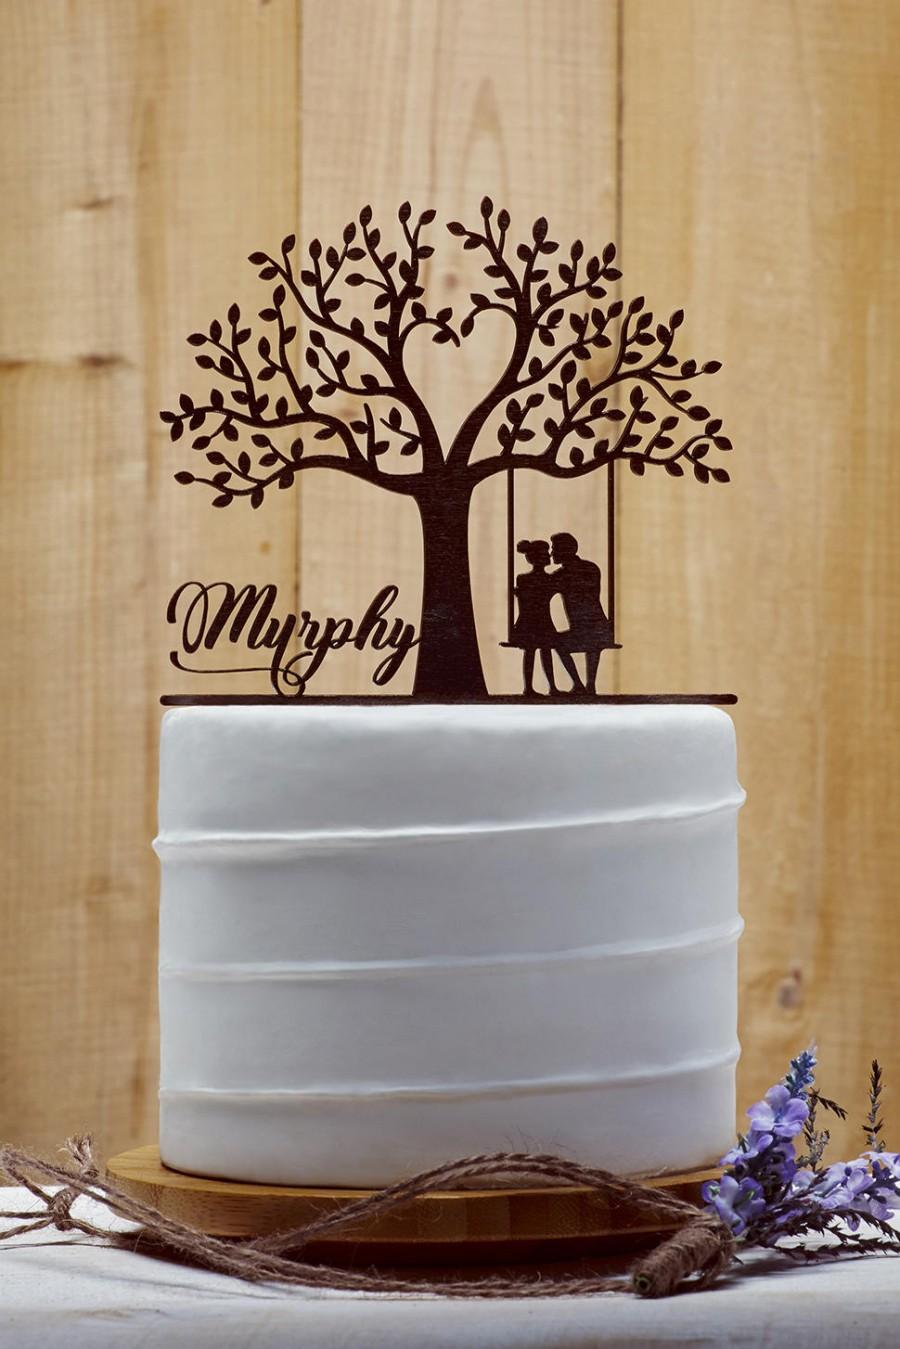 Wedding - Customized Wedding Cake Topper, Personalized Cake Topper for Wedding, Custom Personalized Wedding Cake Topper, Last Name Cake Topper - 02